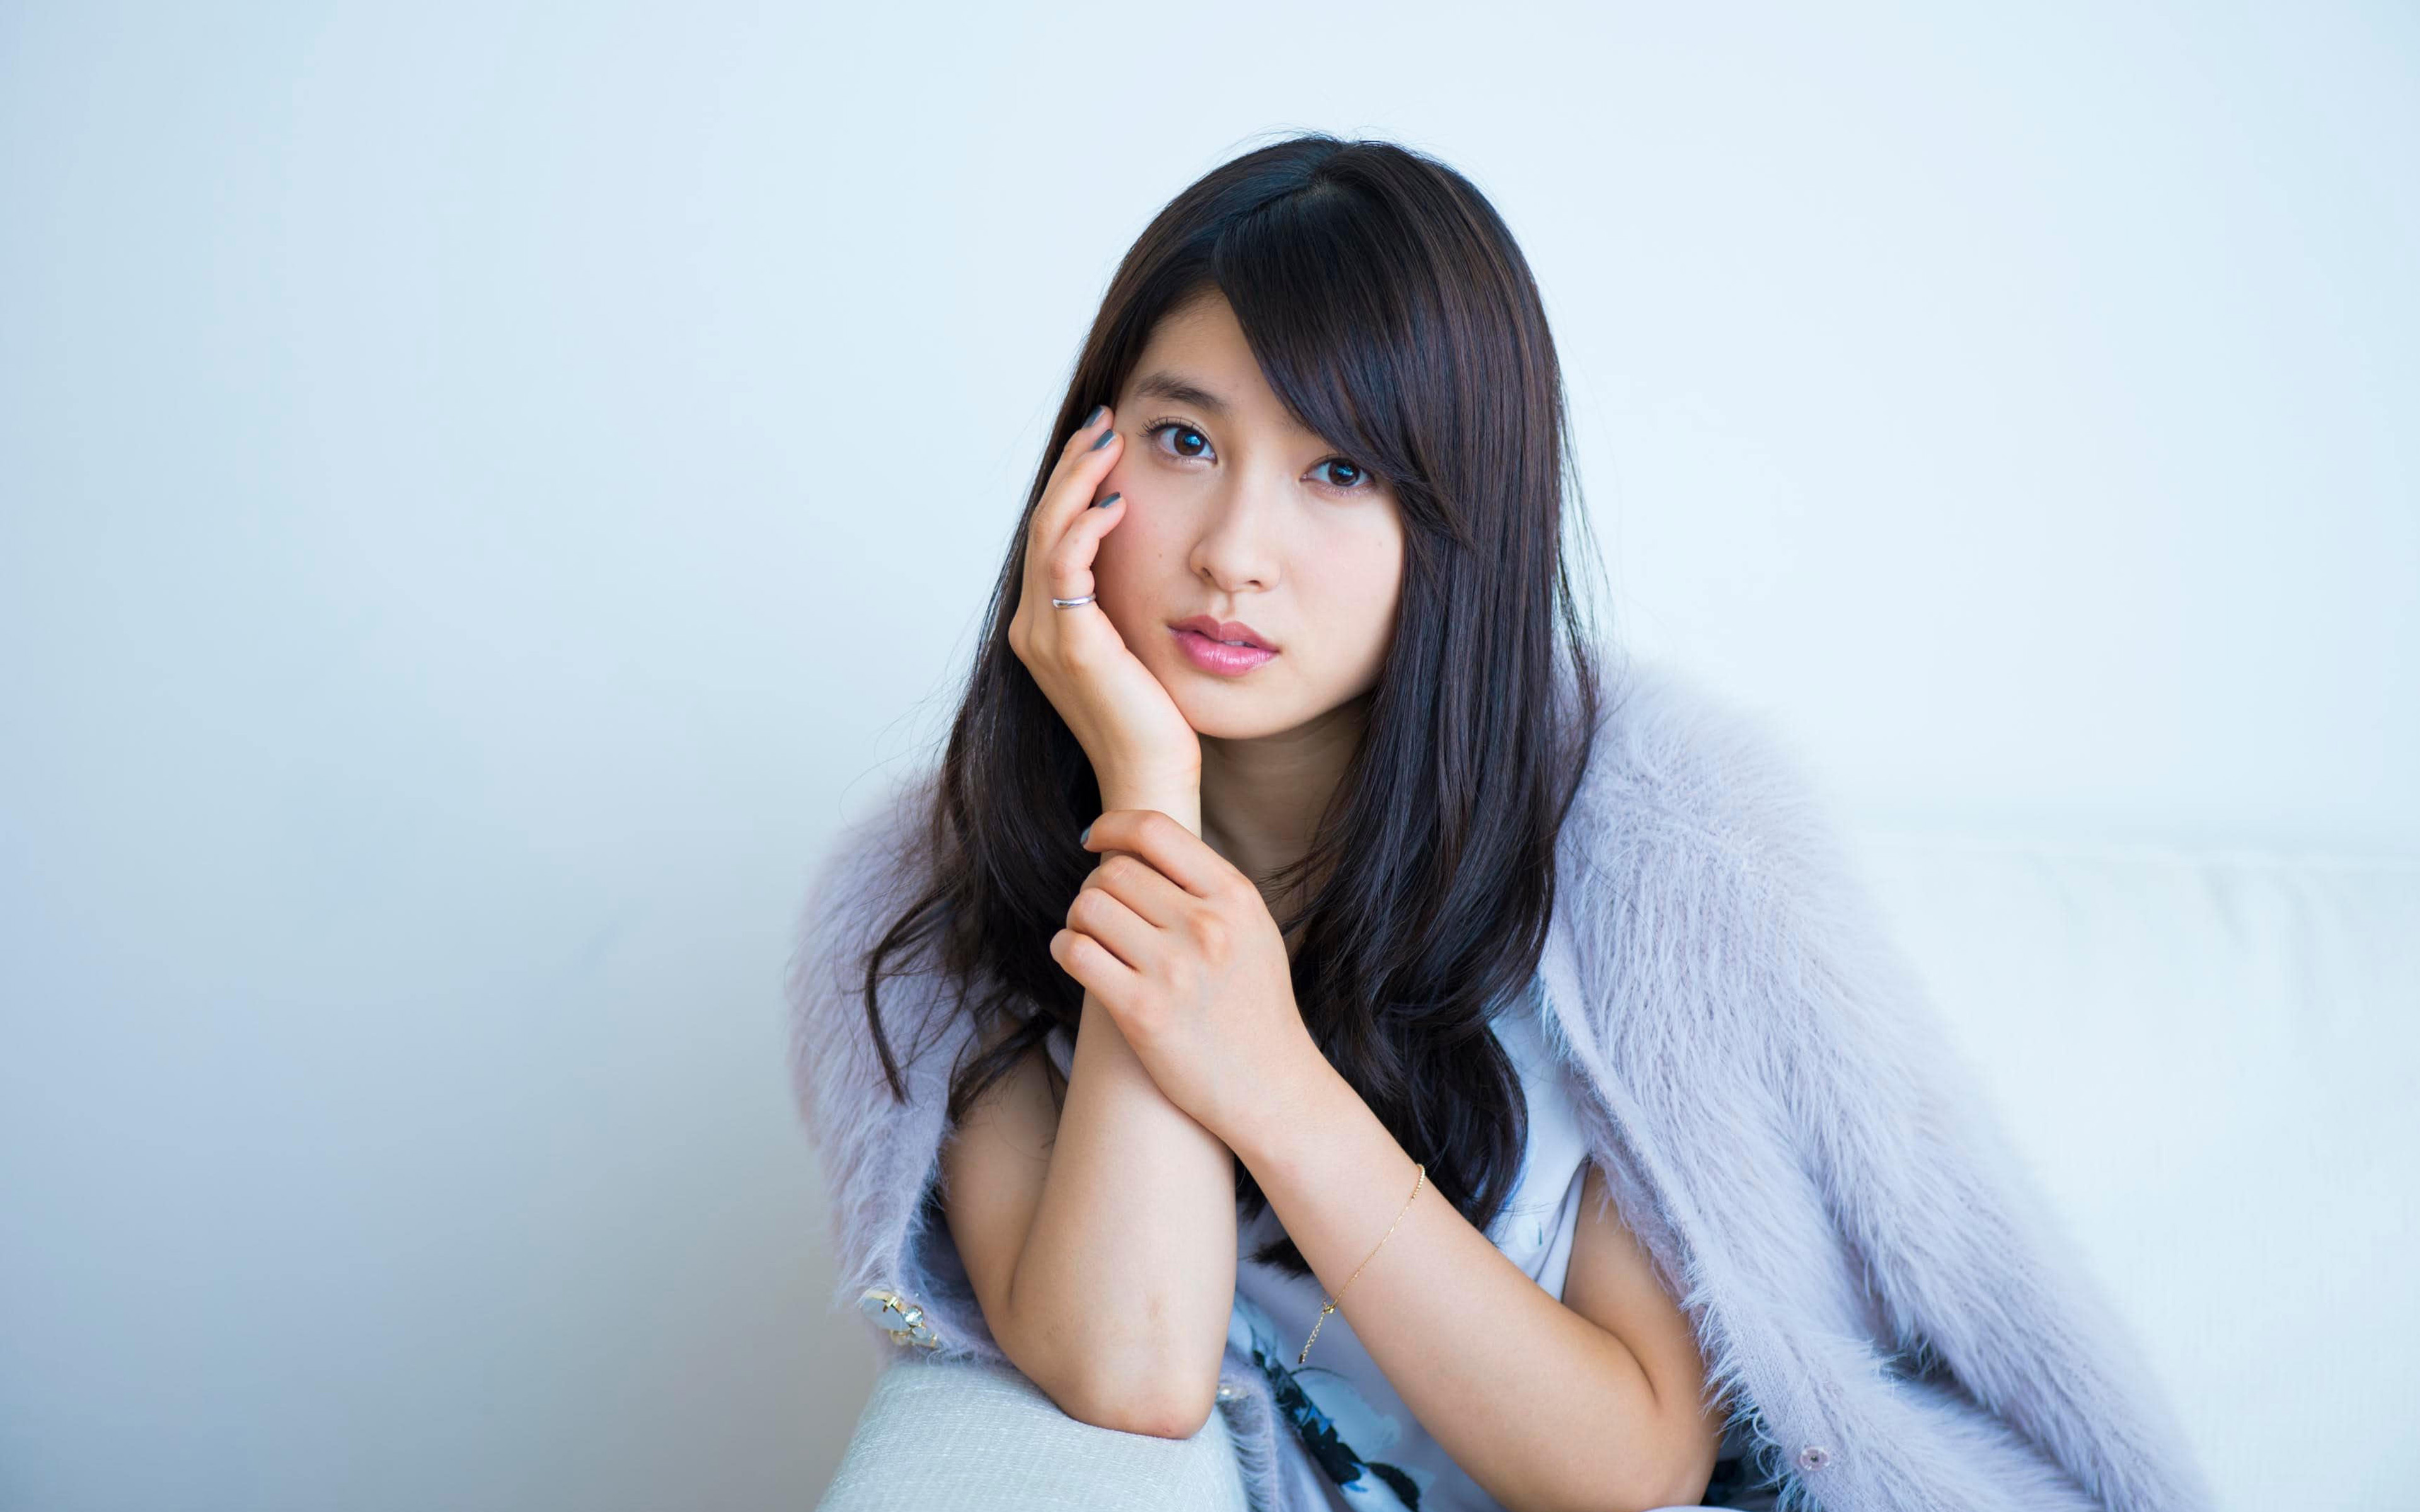 Download wallpapers 4k, Tao Tsuchiya, 2019, japanese actress, beauty